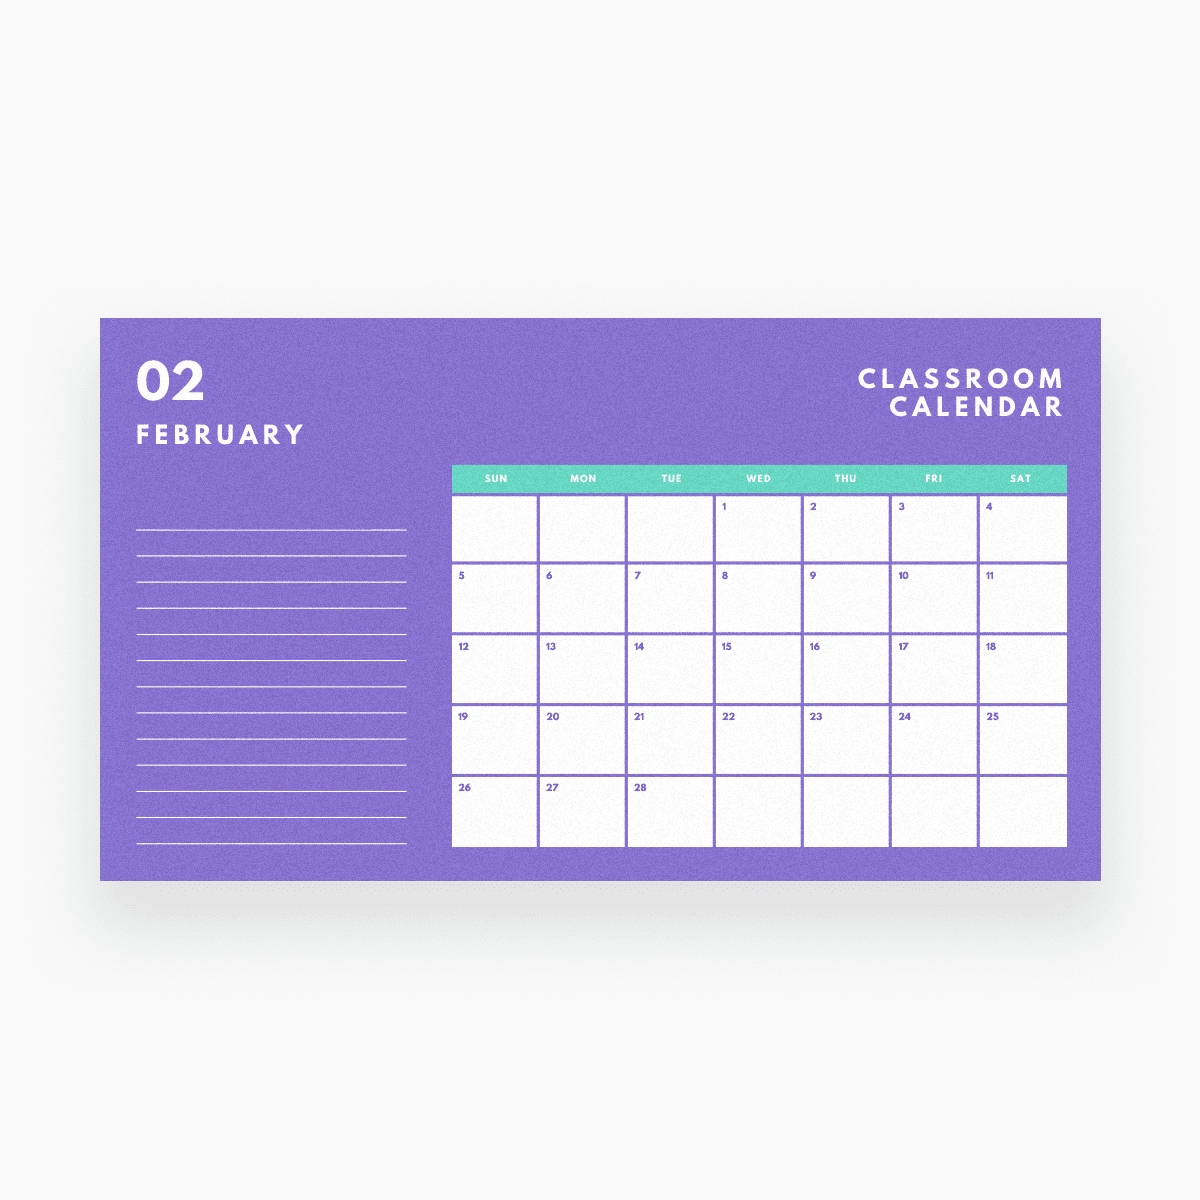 Free Online Calendar Maker: Design A Custom Calendar - Canva